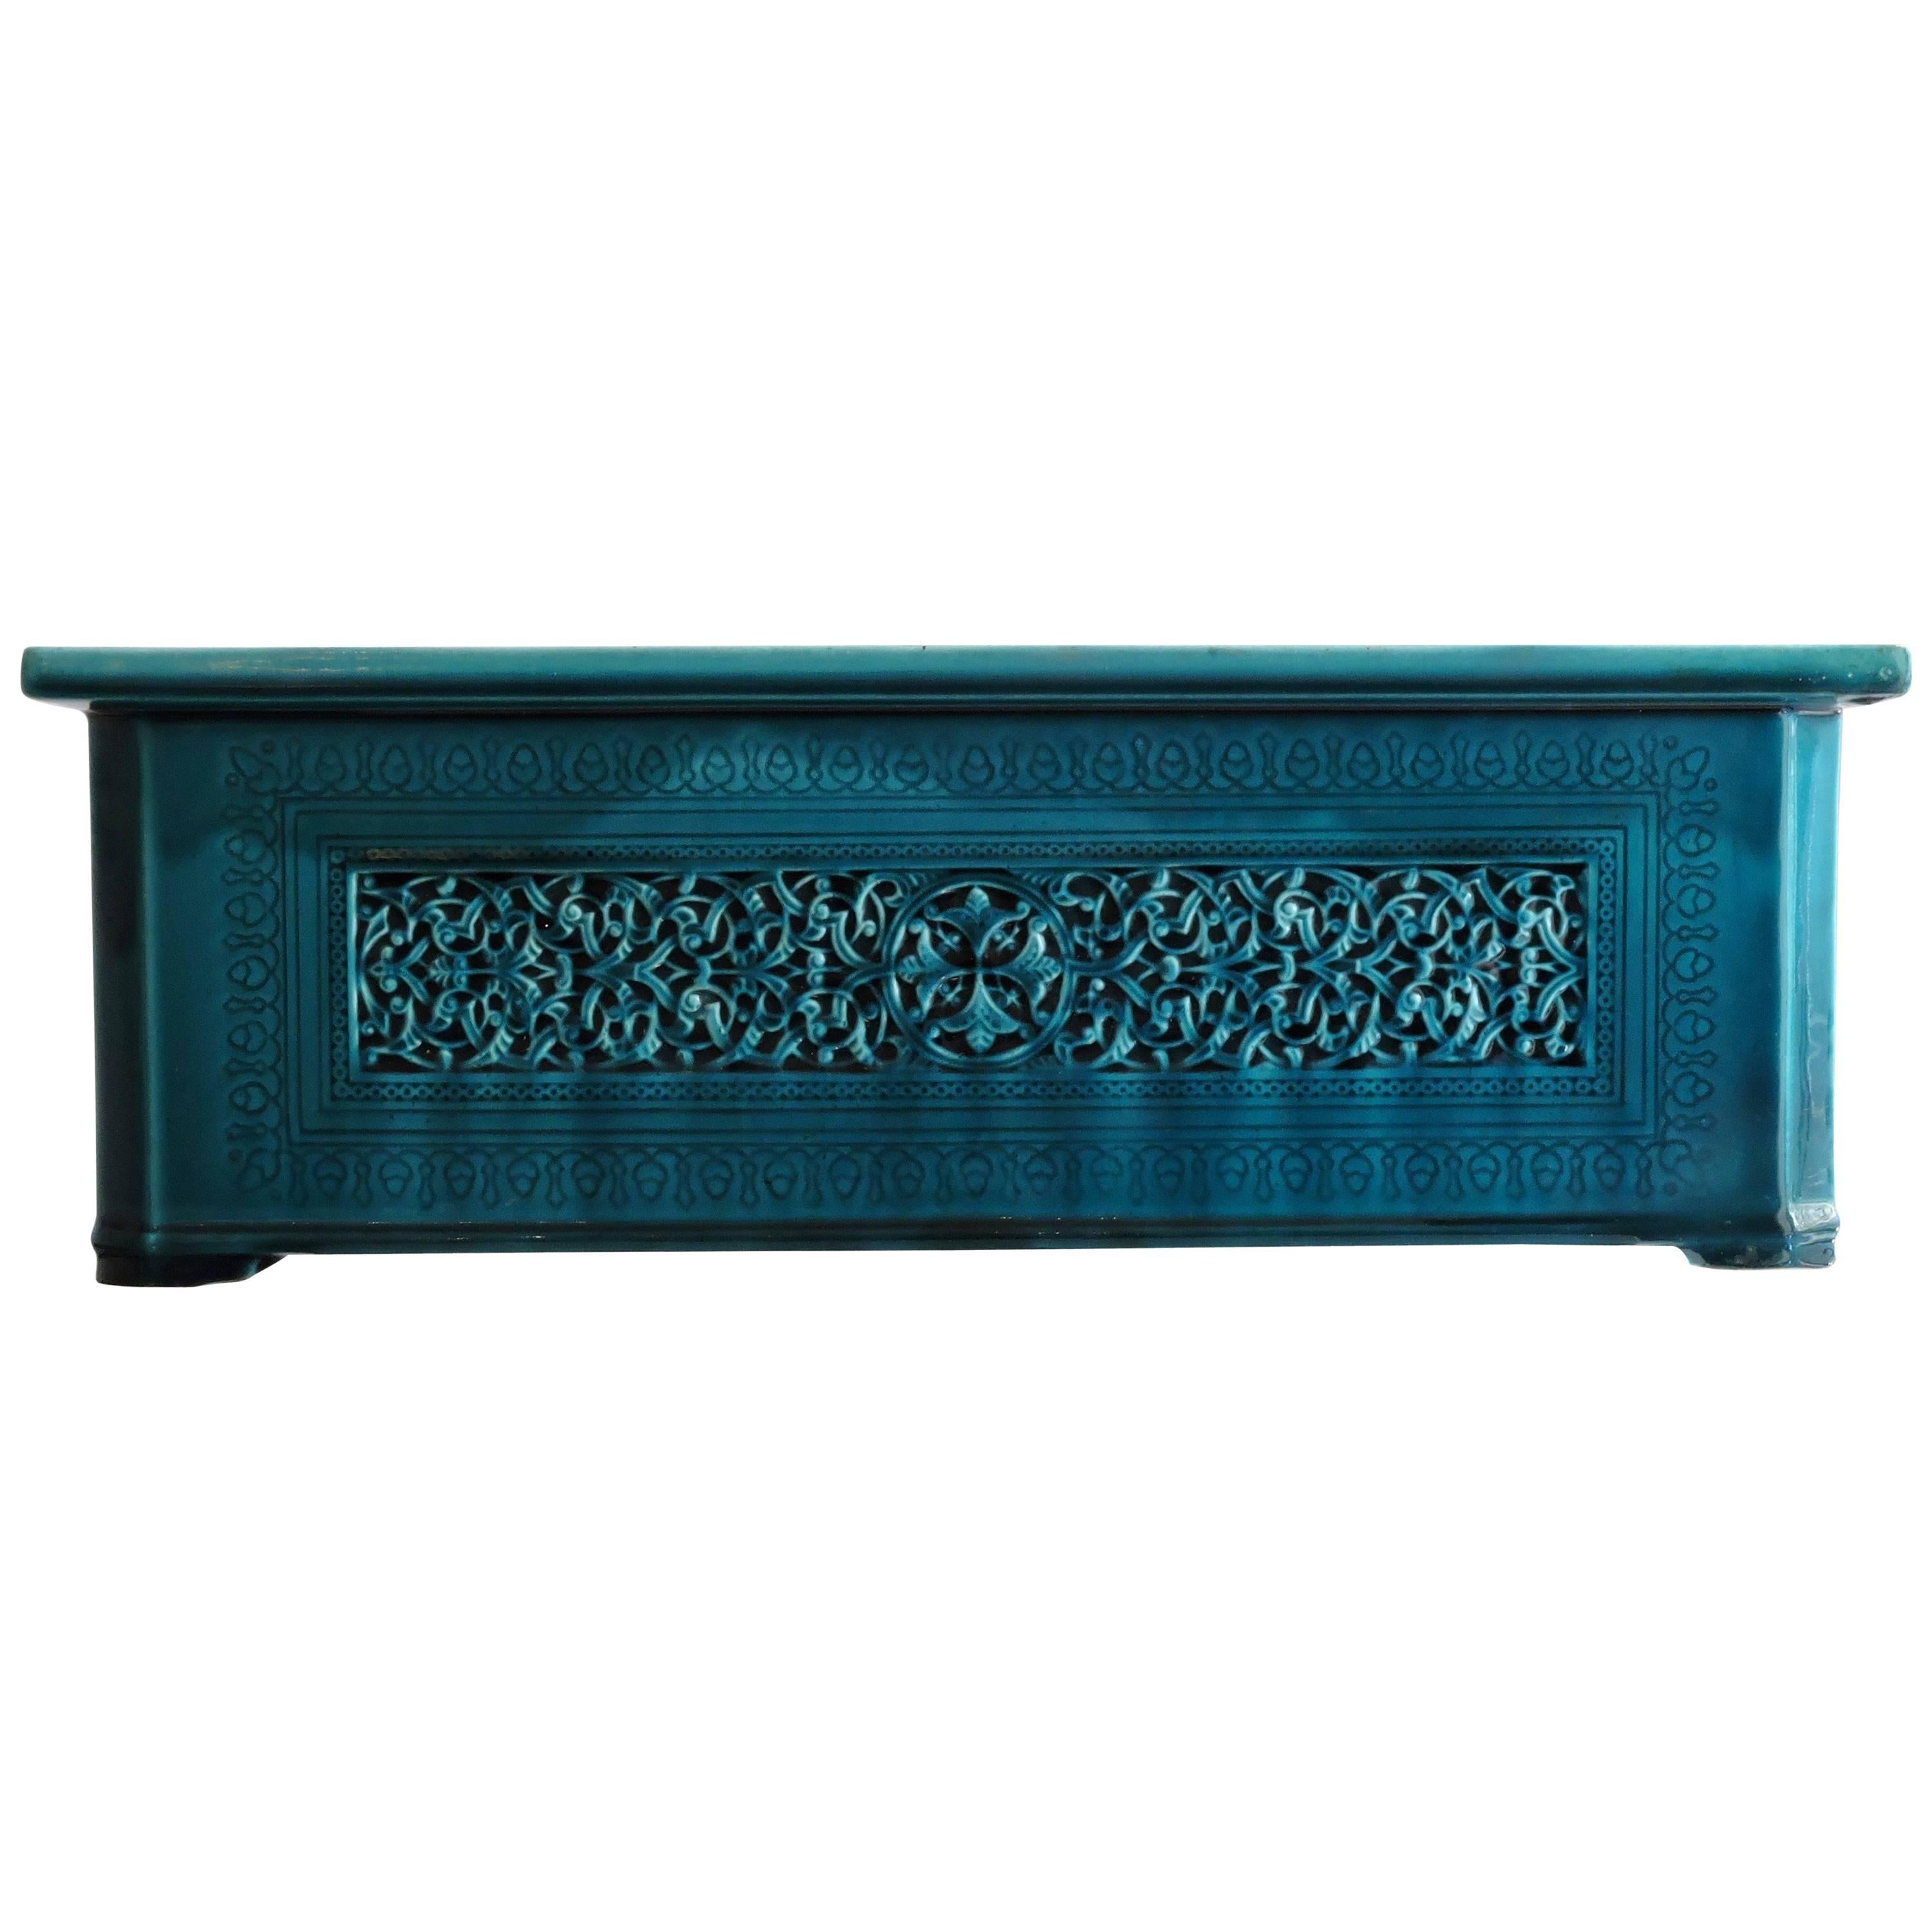 Théodore Deck Blue-Persian Faience Islamic Design Jardinière 19th Century